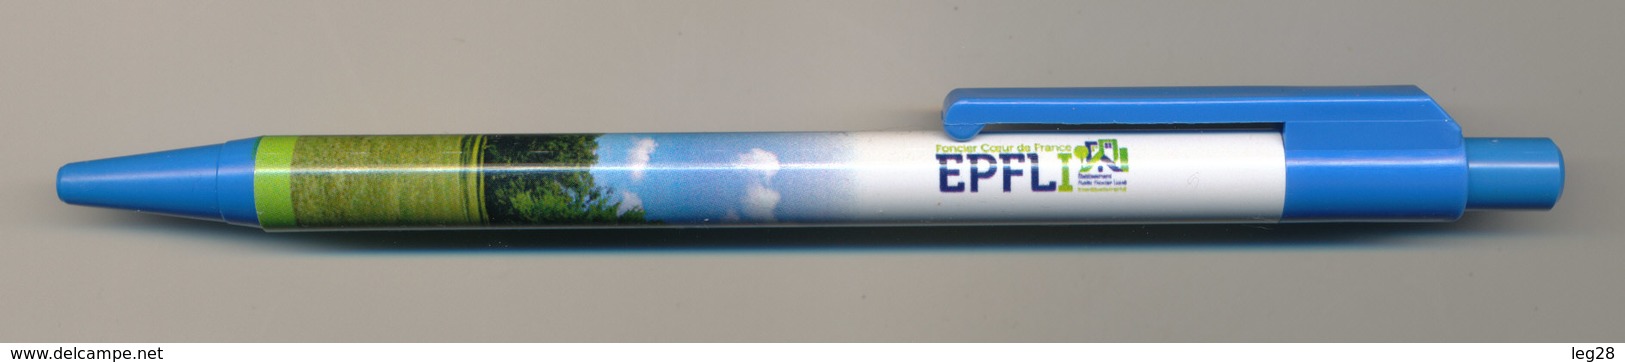 EPFLI - Penne